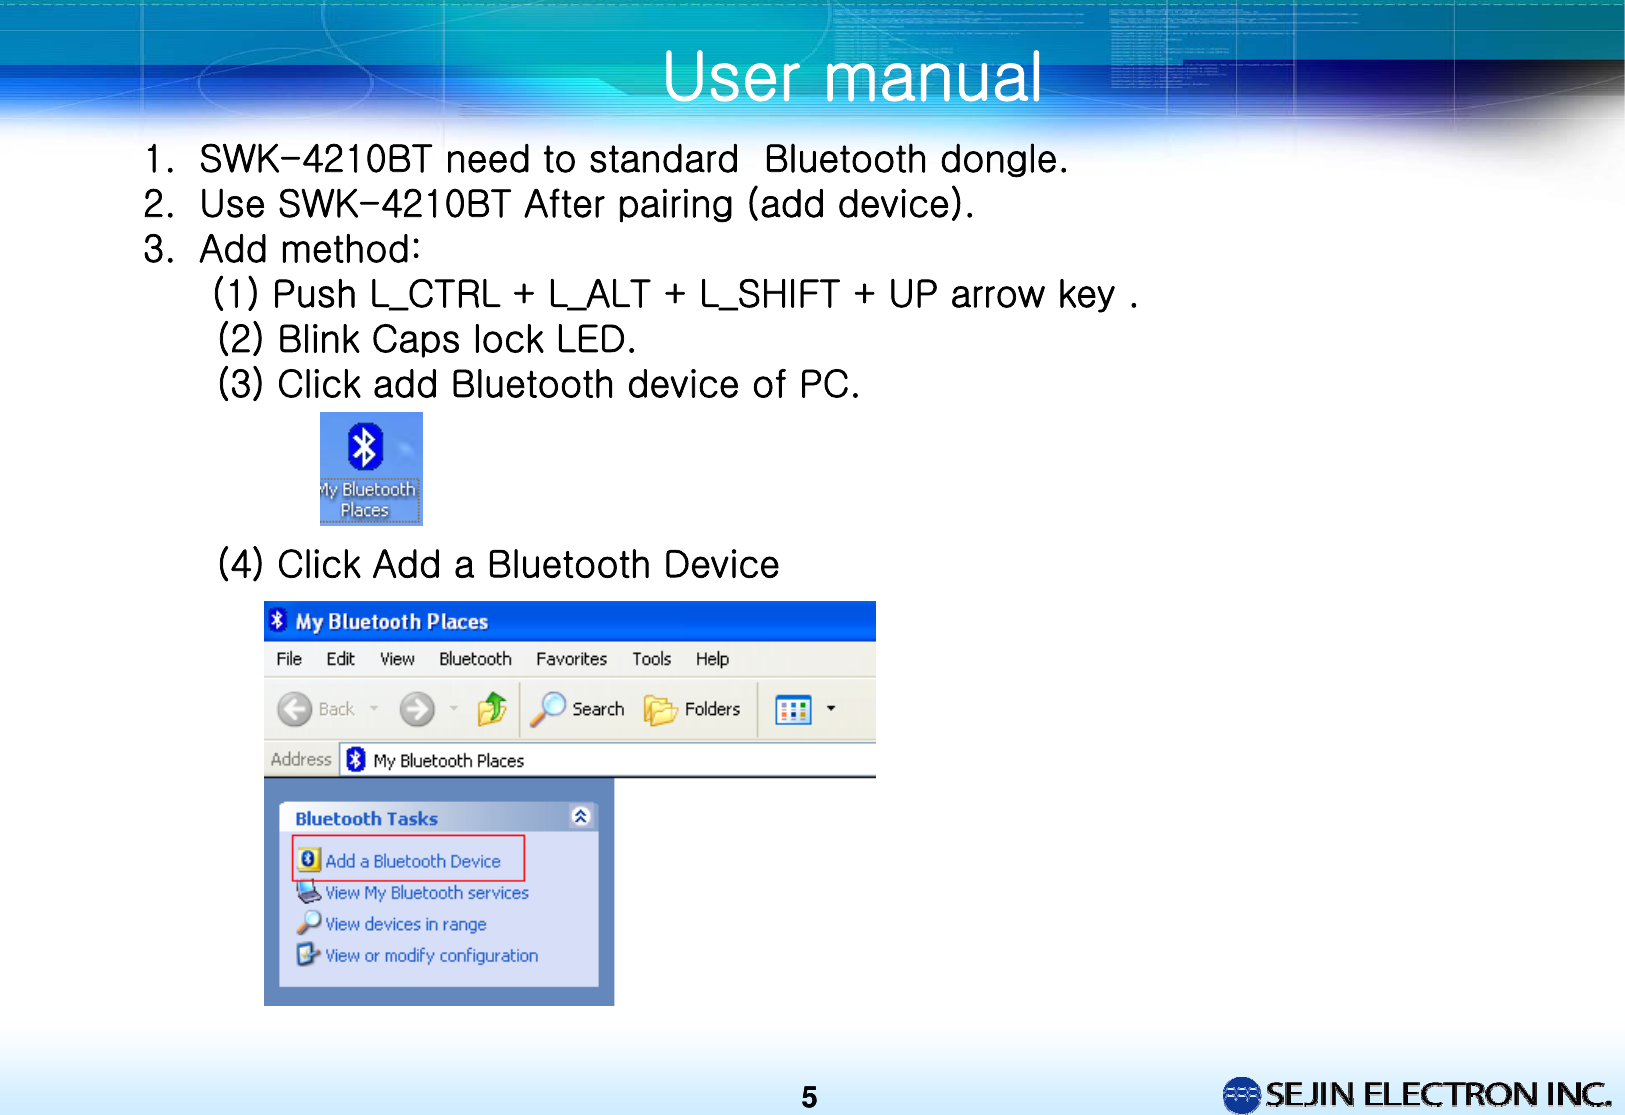 55User manual1. SWK-4210BT need to standard  Bluetooth dongle. 2. Use SWK-4210BT After pairing (add device).3. Add method: (1) Push L_CTRL + L_ALT + L_SHIFT + UP arrow key .(2) Blink Caps lock LED. (3) Click add Bluetooth device of PC.(4) Click Add a Bluetooth Device